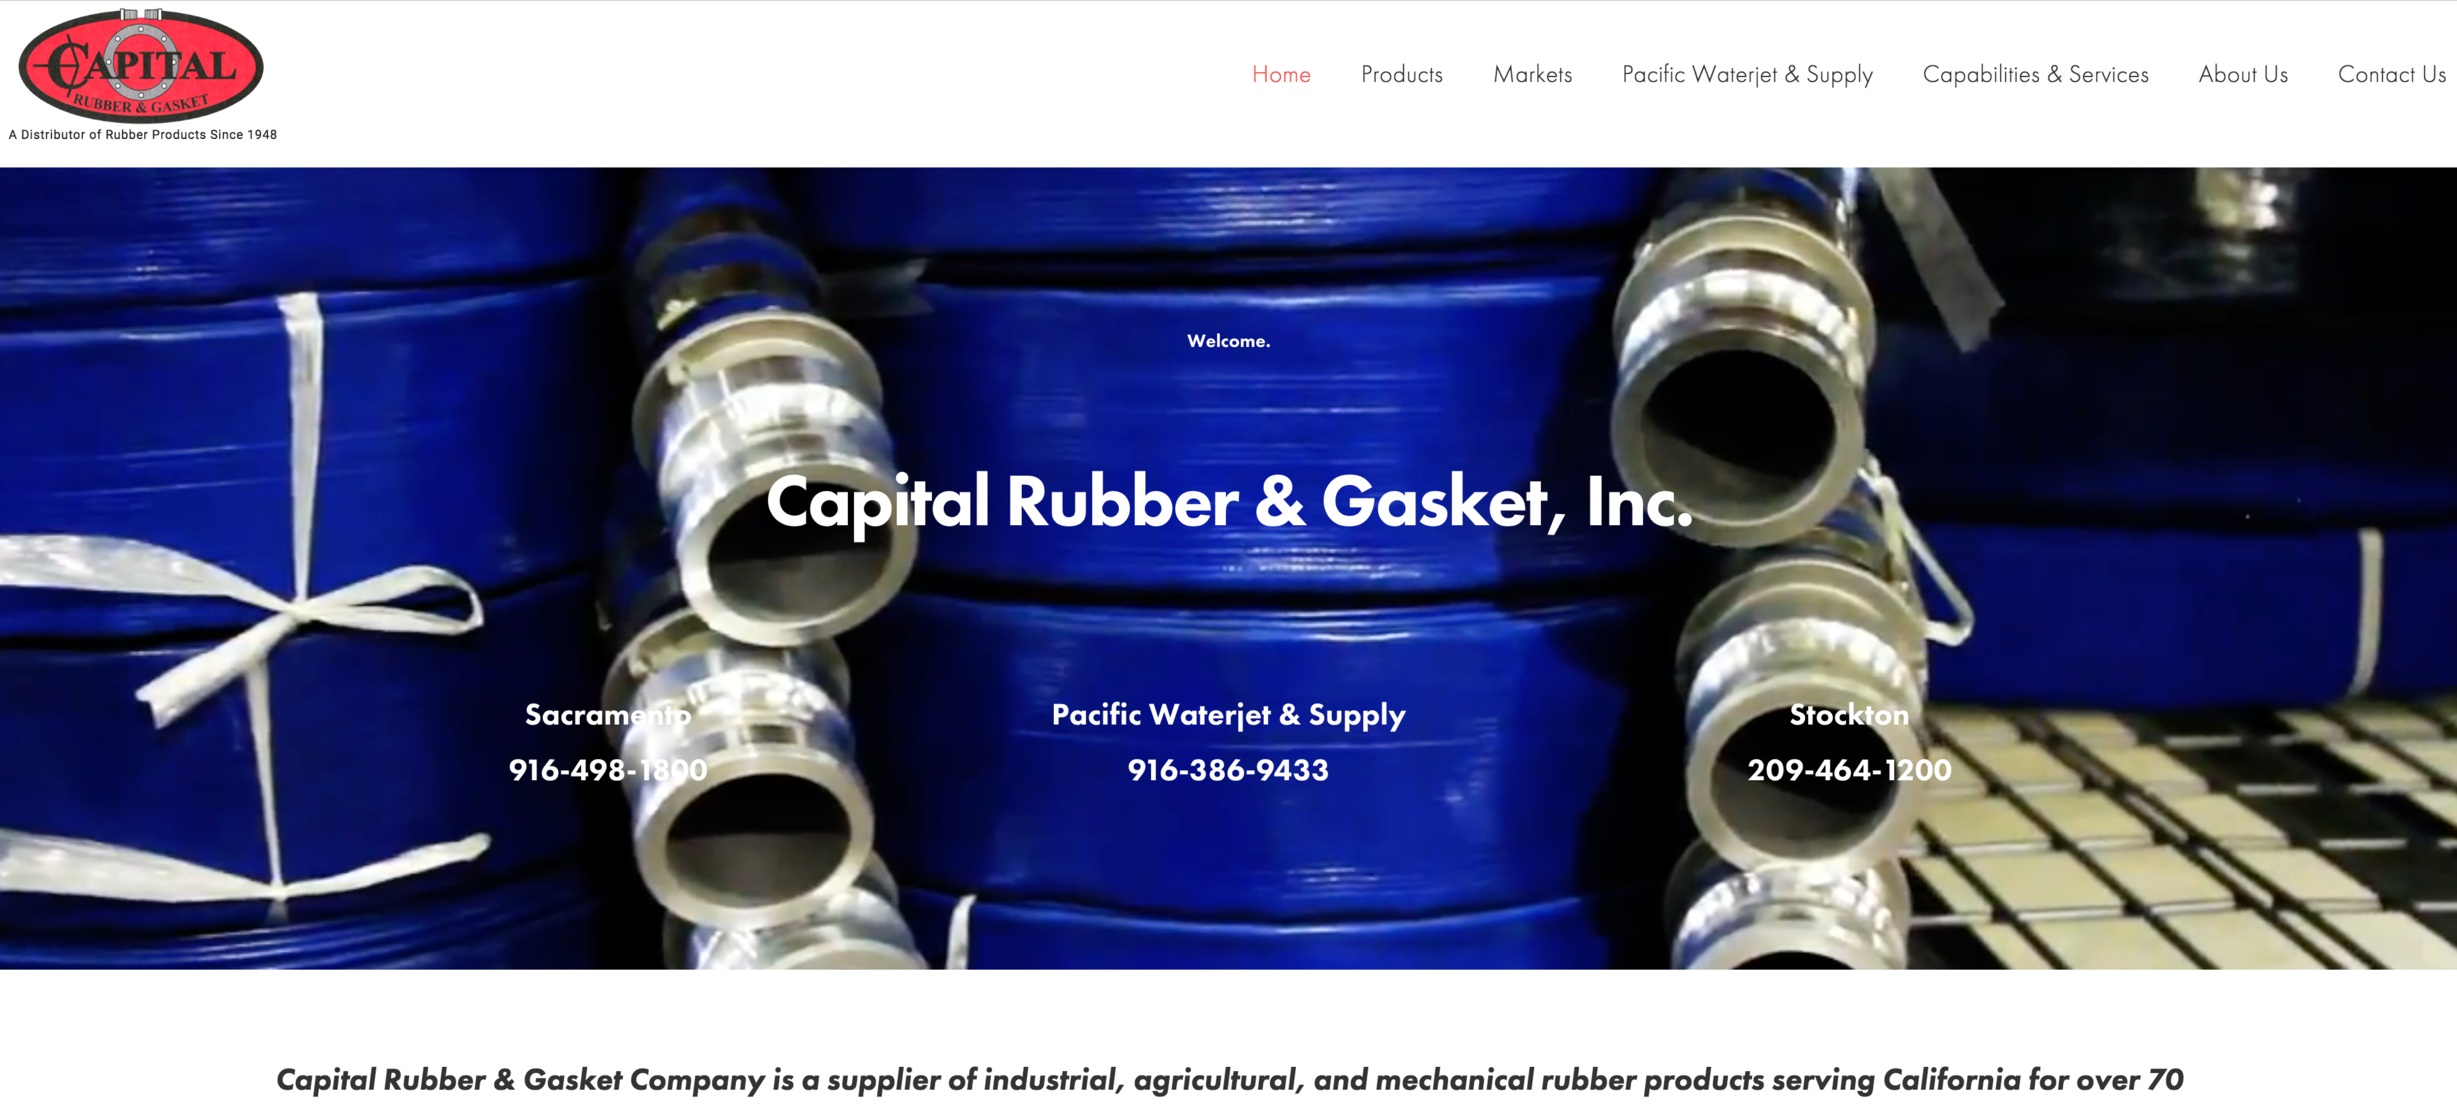 Capital Rubber & Gasket